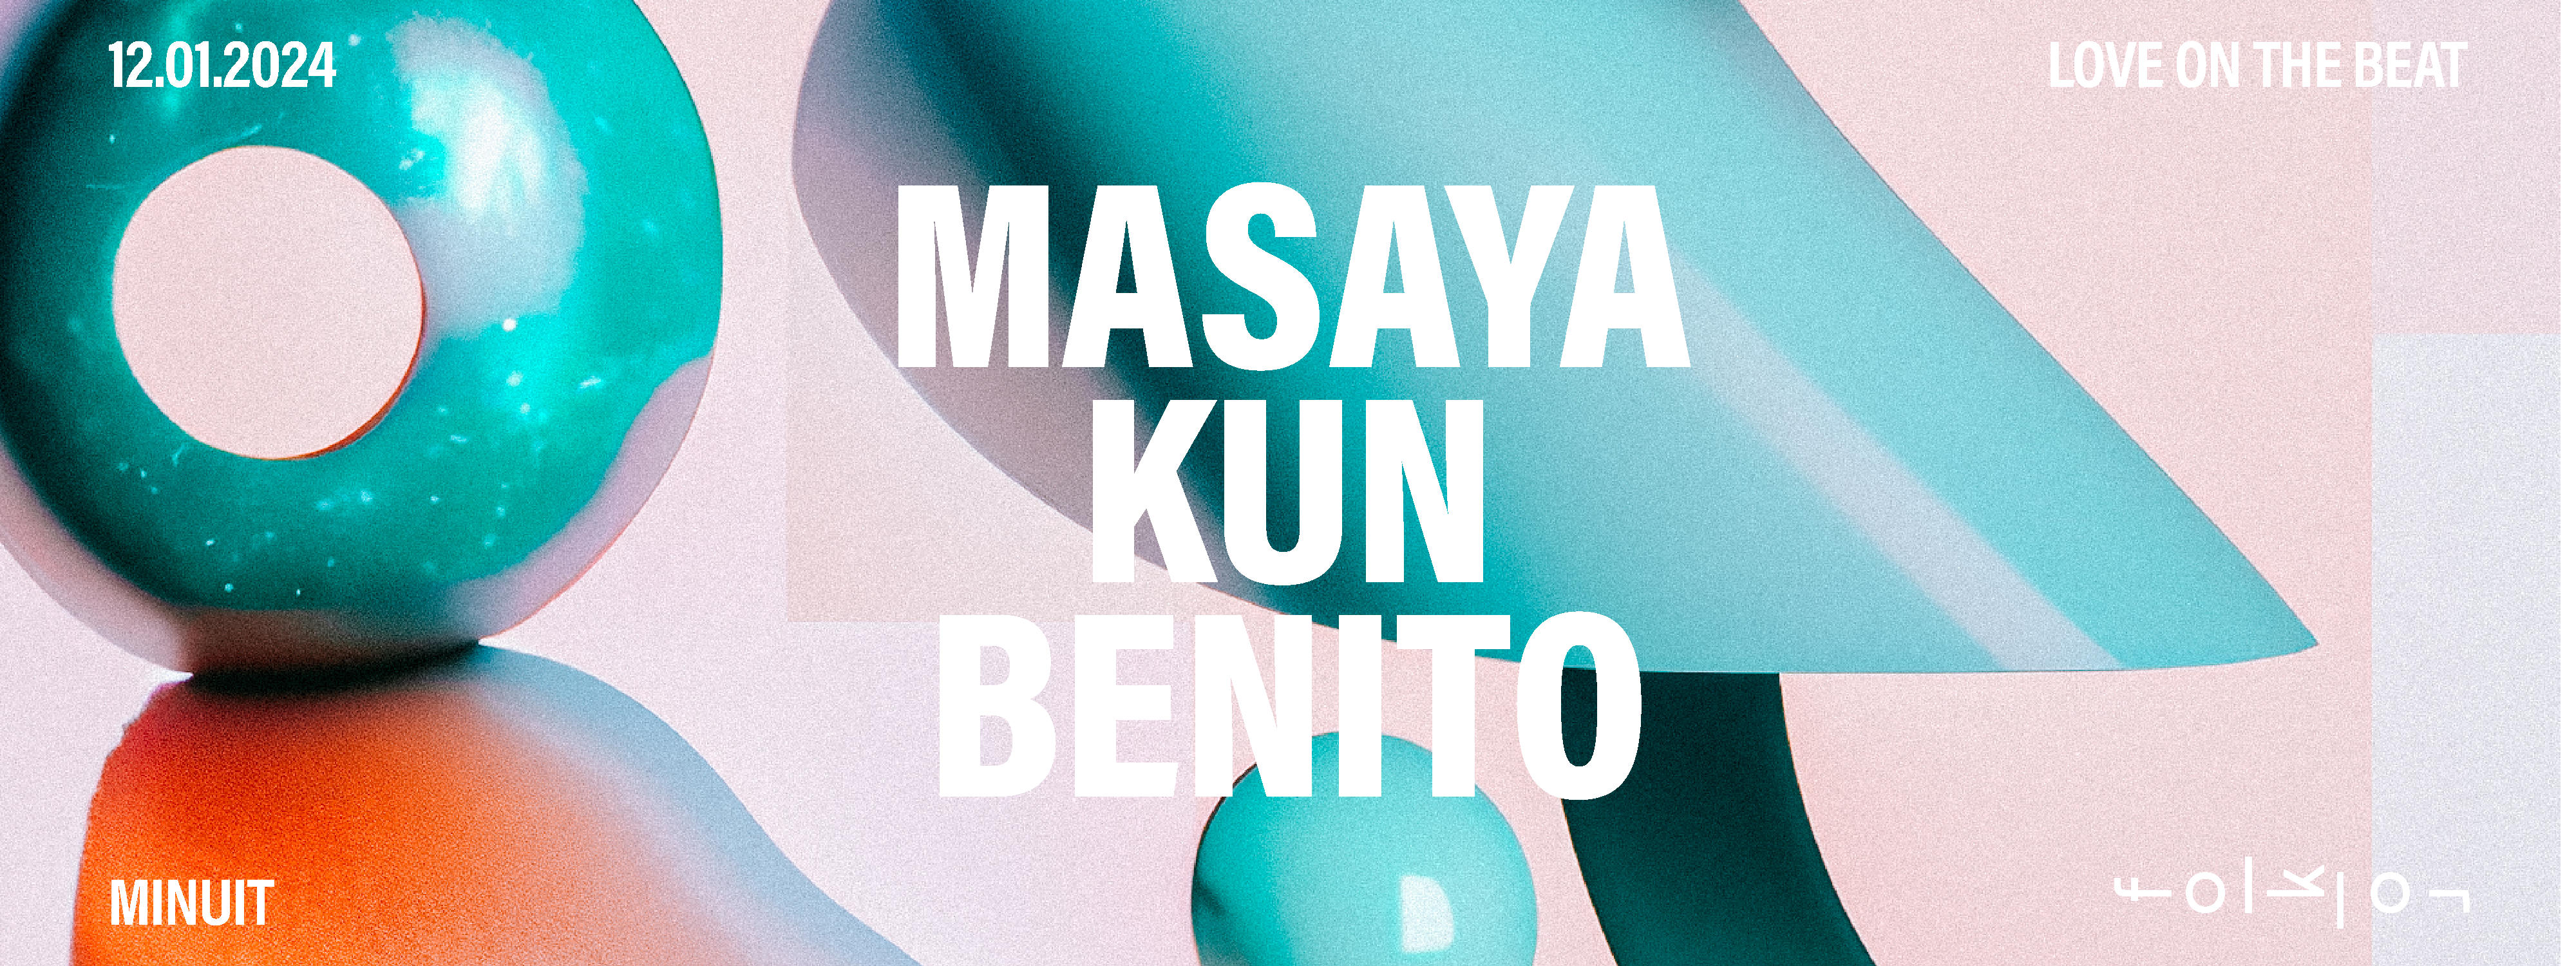 Love On The Beat /// Masaya - Kūn - Benito - フライヤー表